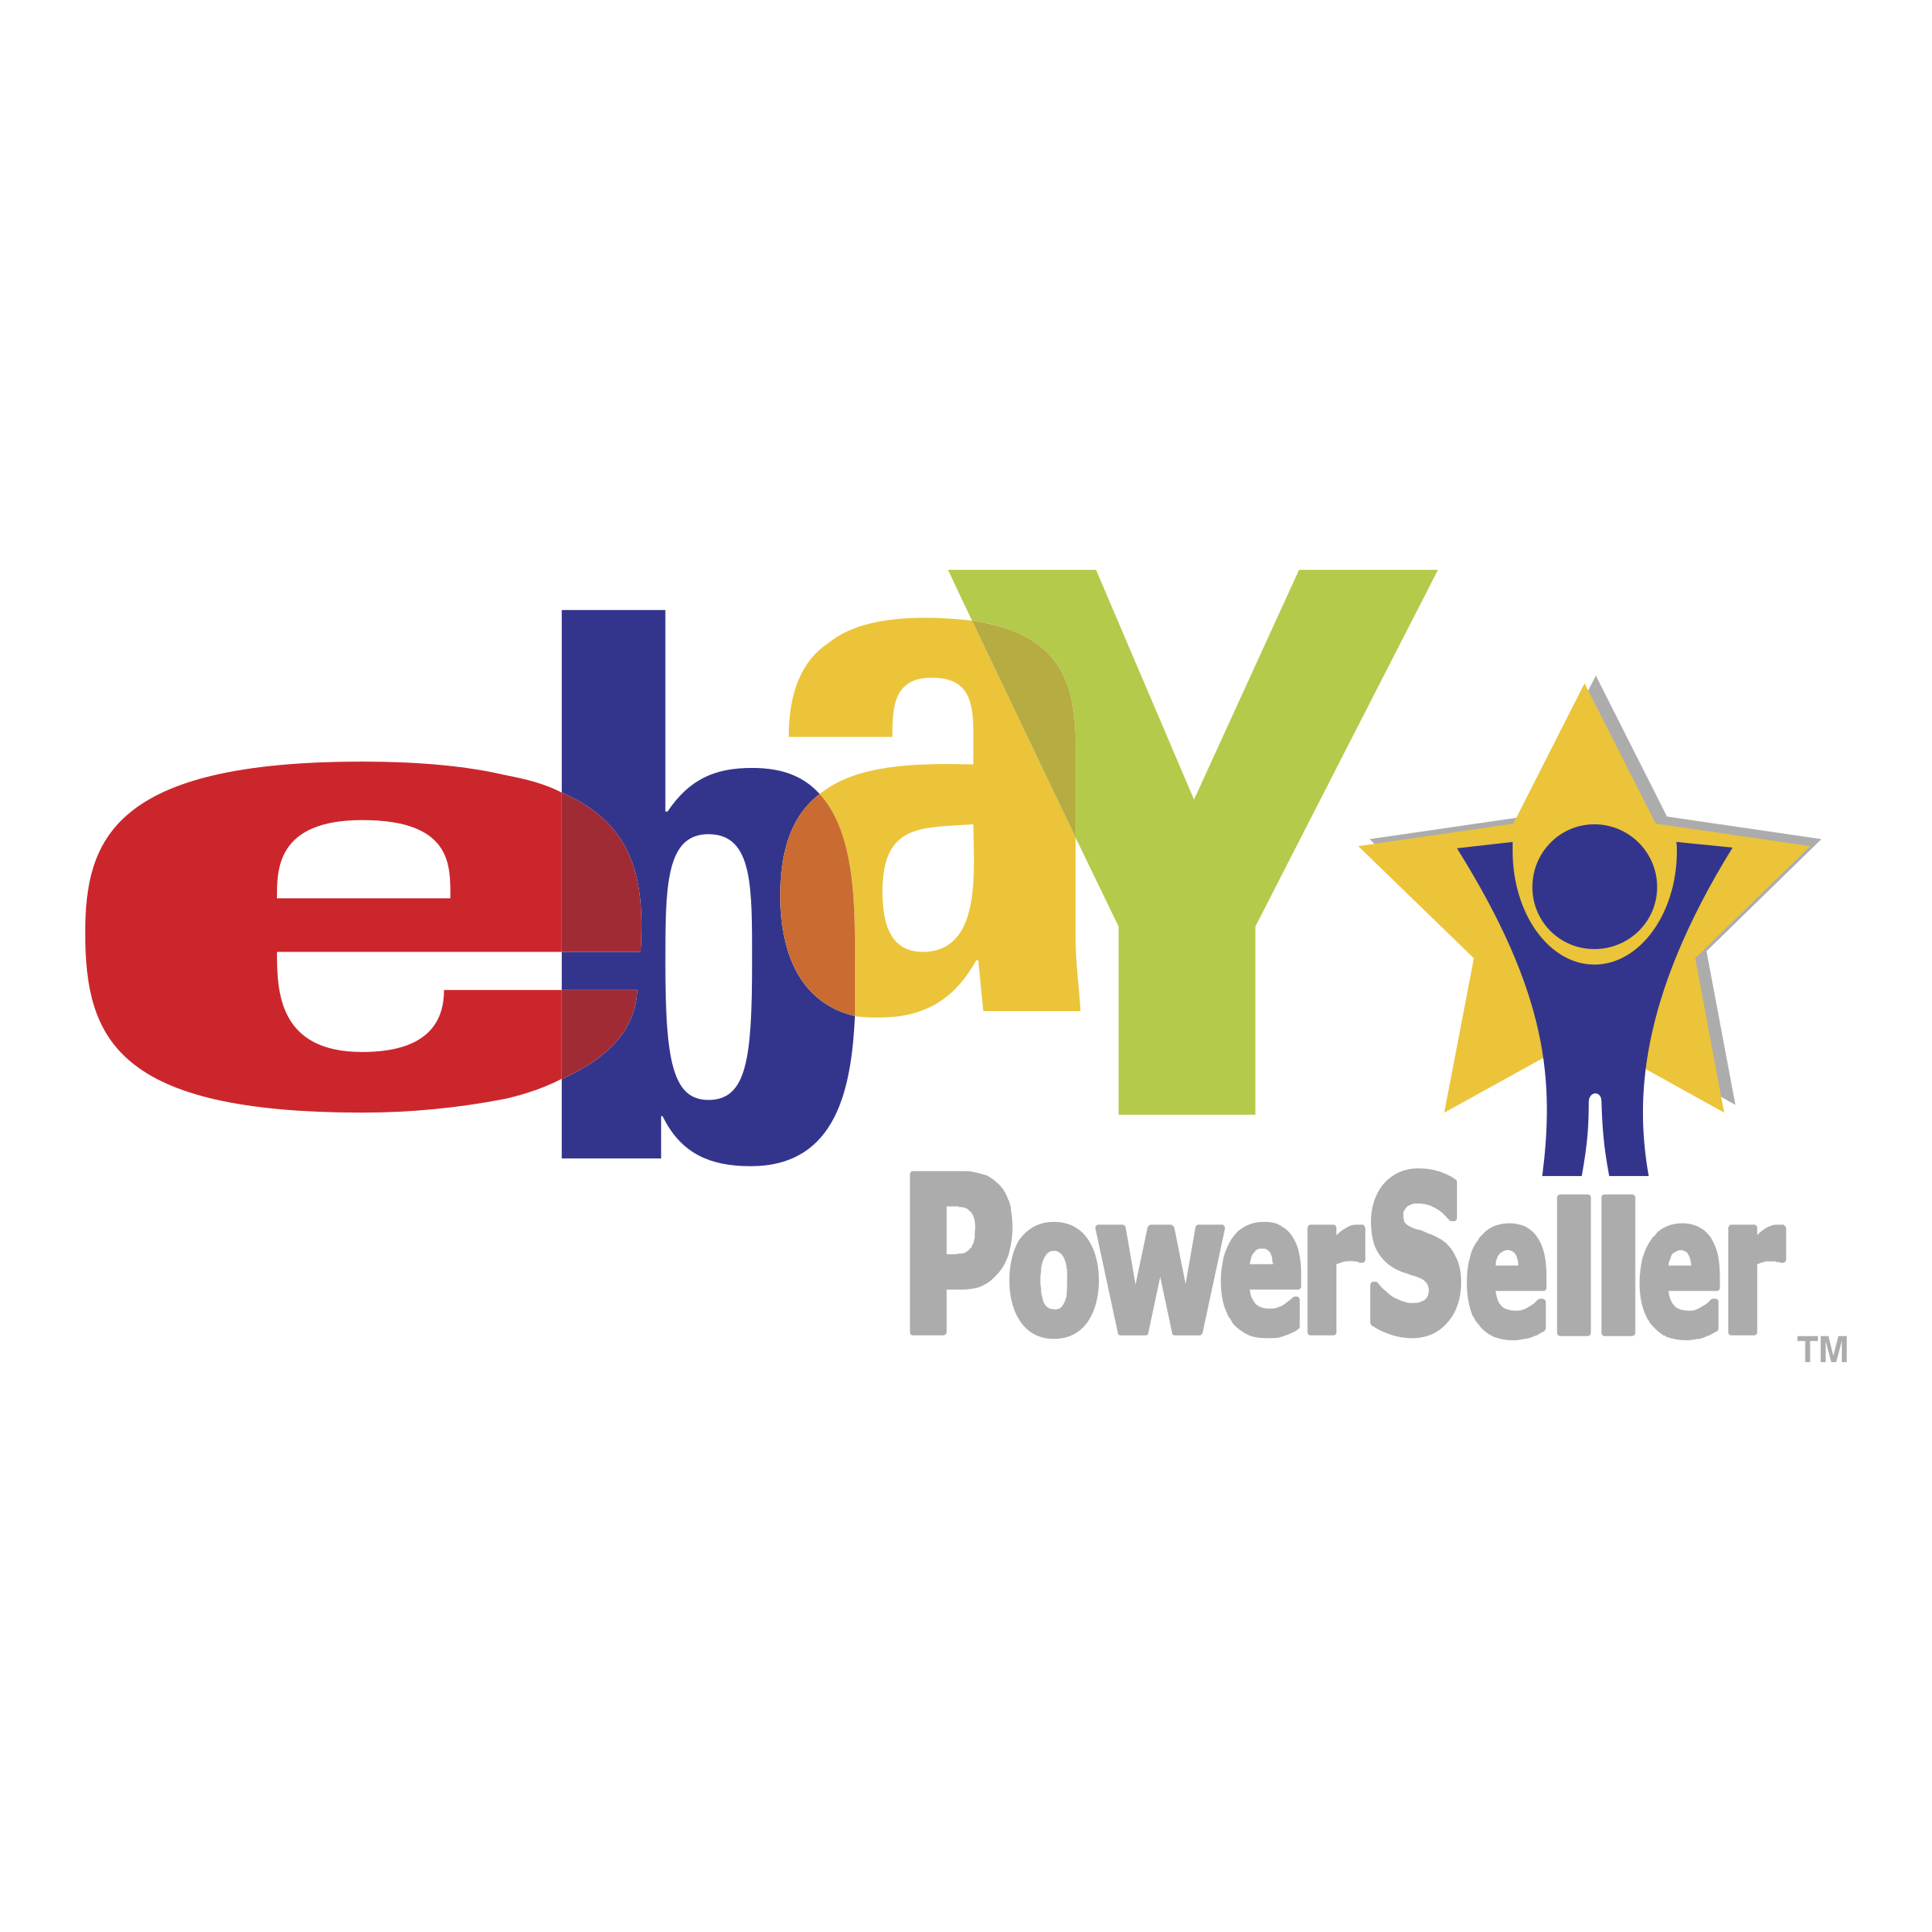 Vektor ebay logo Gambar Transparan